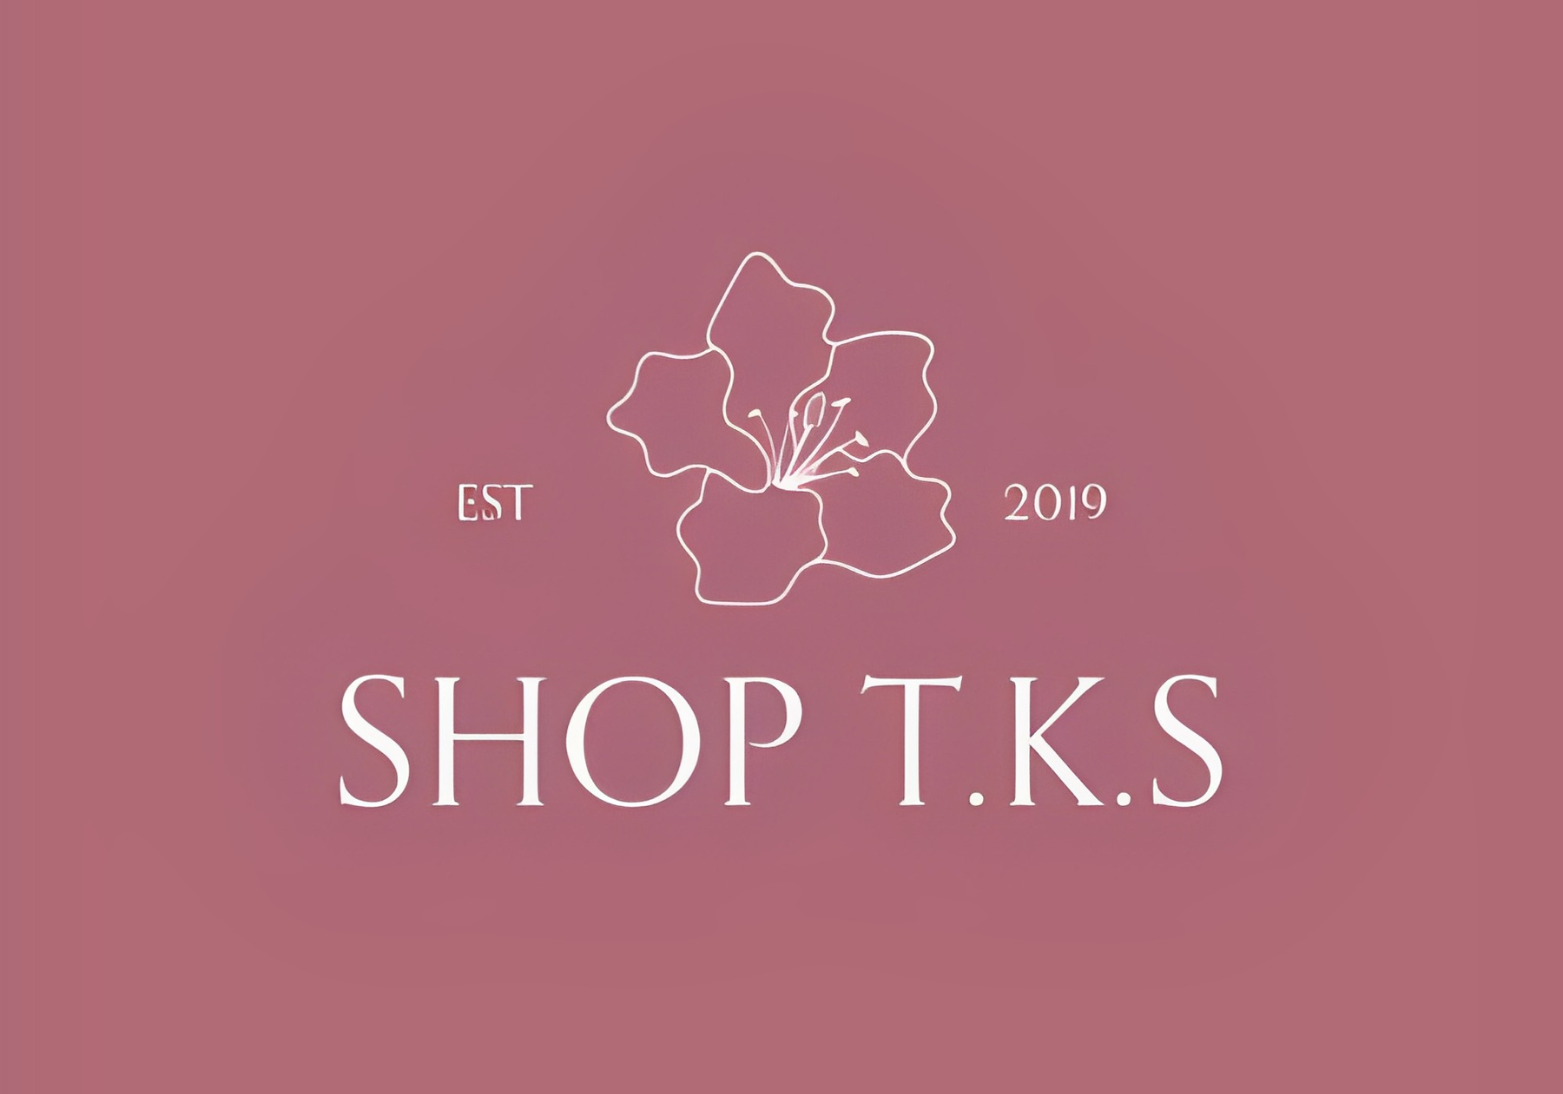 Alumni Marketplace: T.K.S. (The Kimono Store)